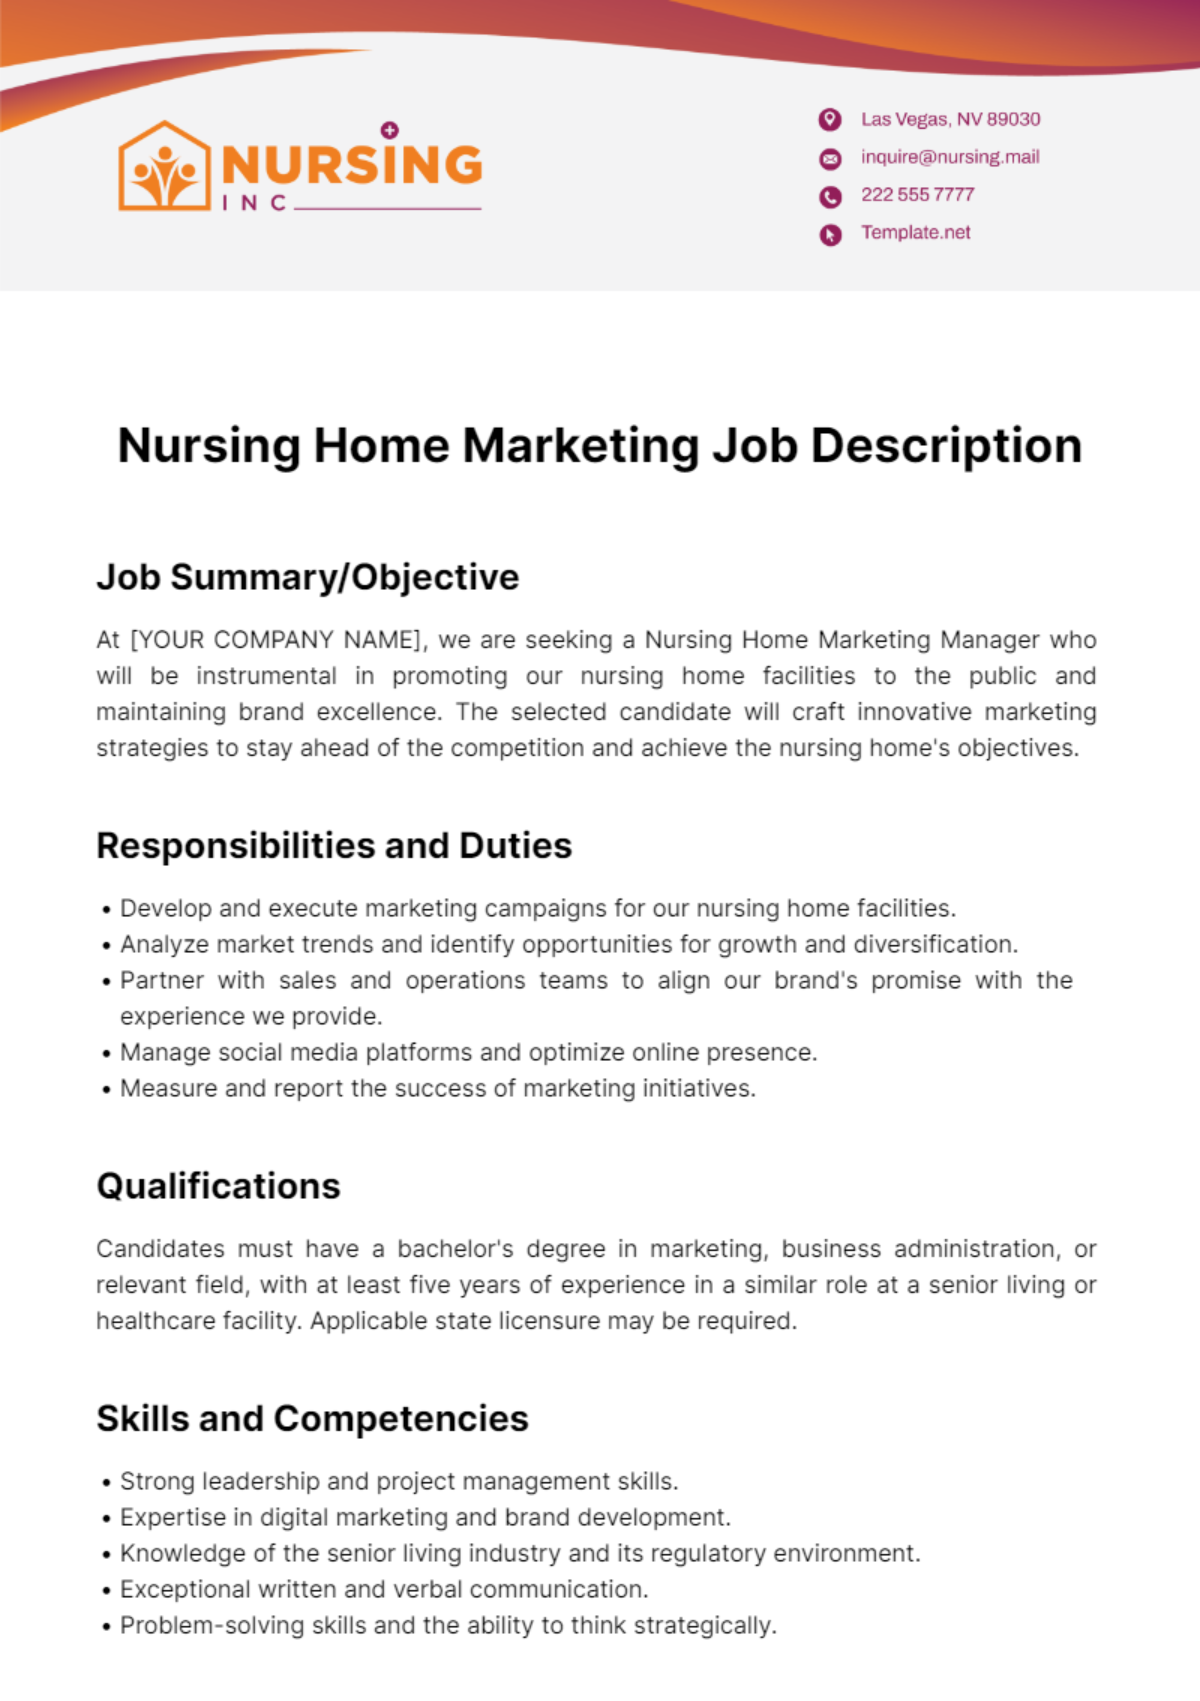 Nursing Home Marketing Job Description Template